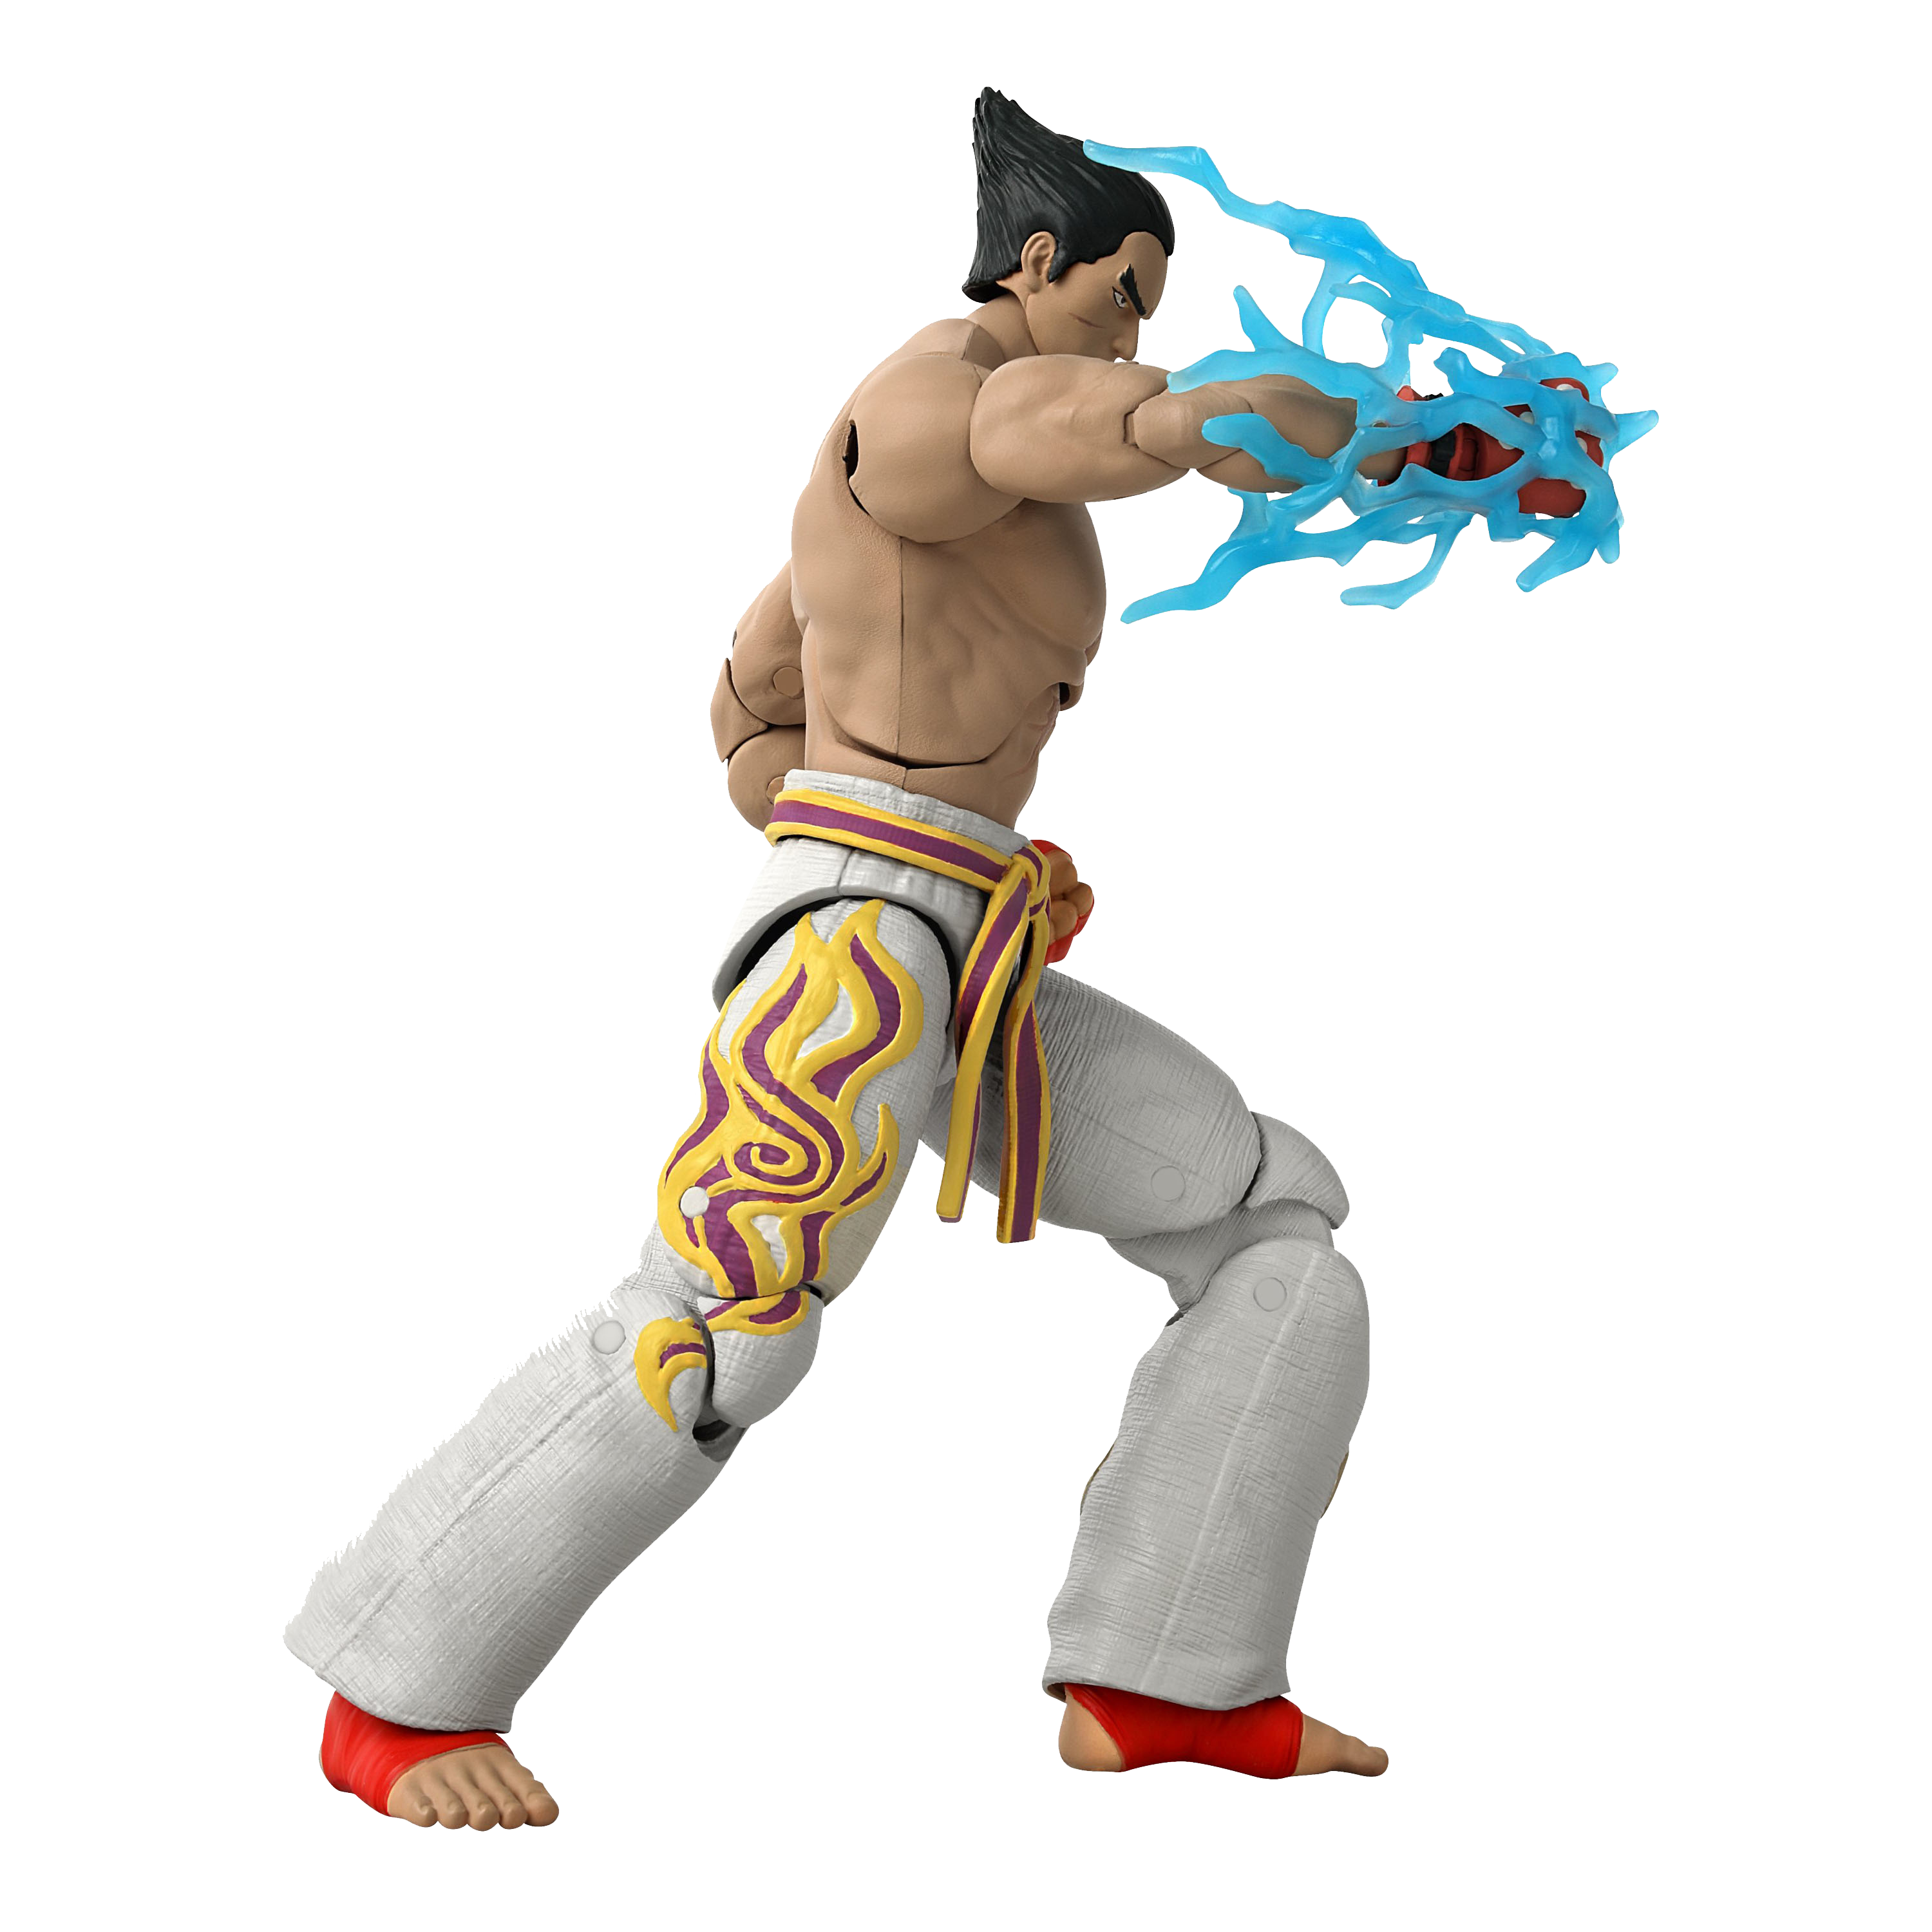 Tekken: Kazuya Mishima Game Dimensions Action Figure 